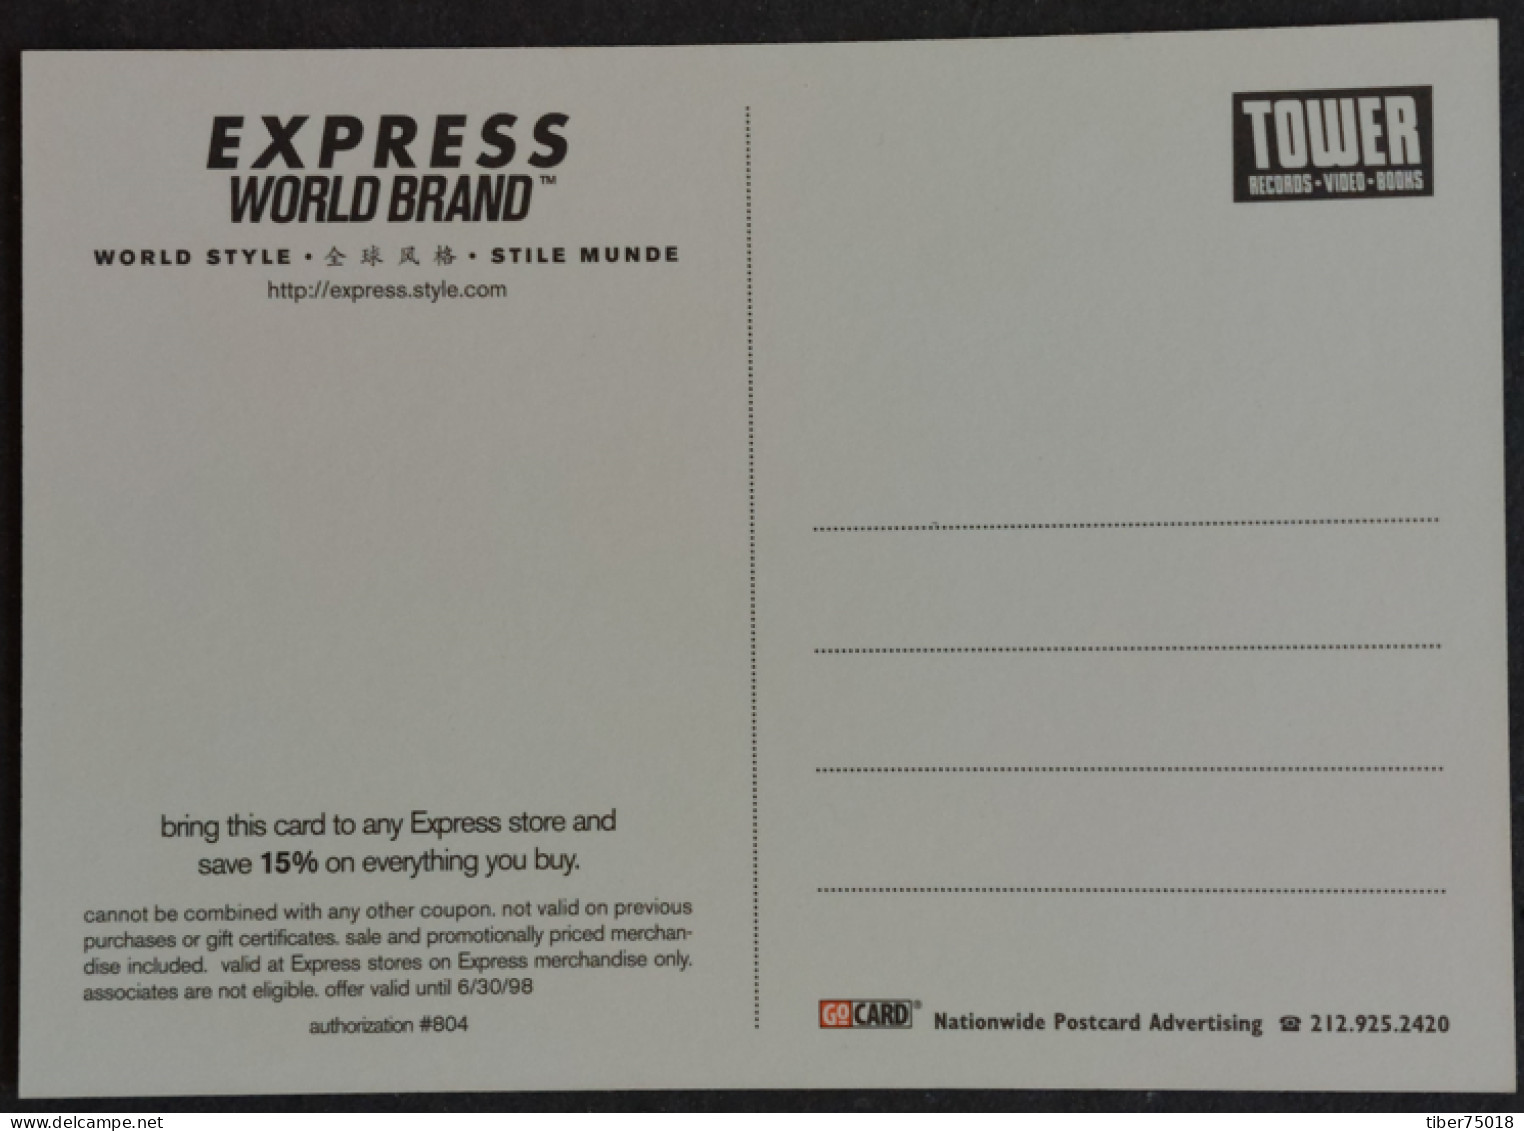 Carte Postale (Tower Records) Express World Brand (mode - Vêtements) World Style / Stile Munde - Advertising